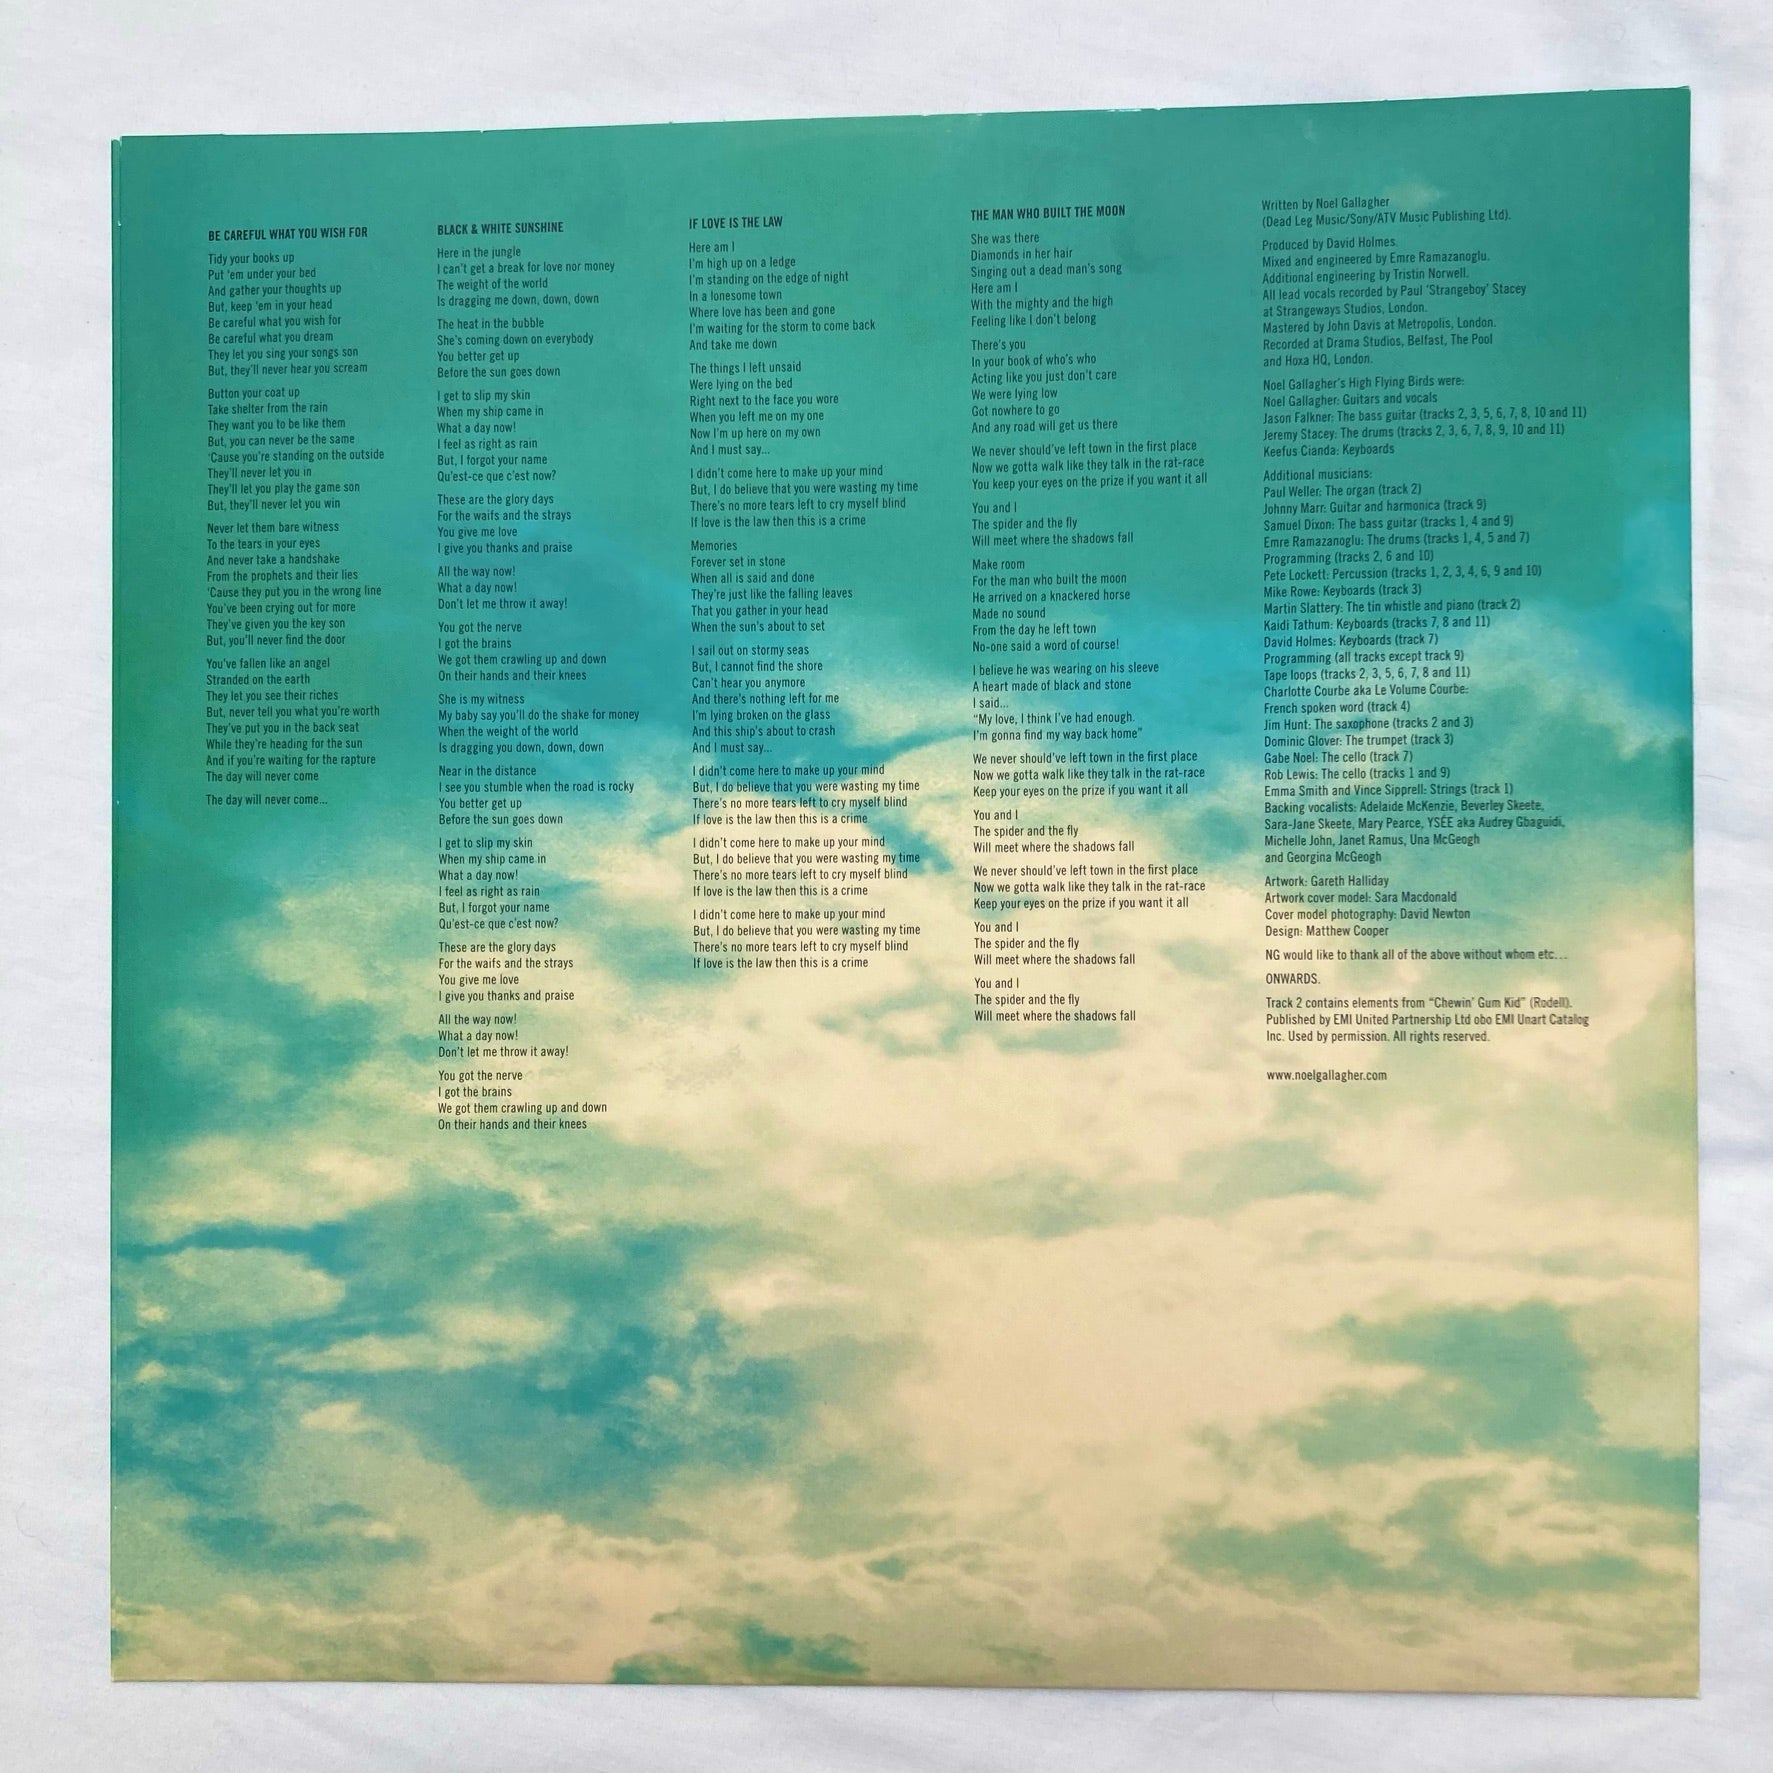 Noel Gallagher's High Flying Birds - Who Built The Moon (LP vinyle blanc en édition limitée)